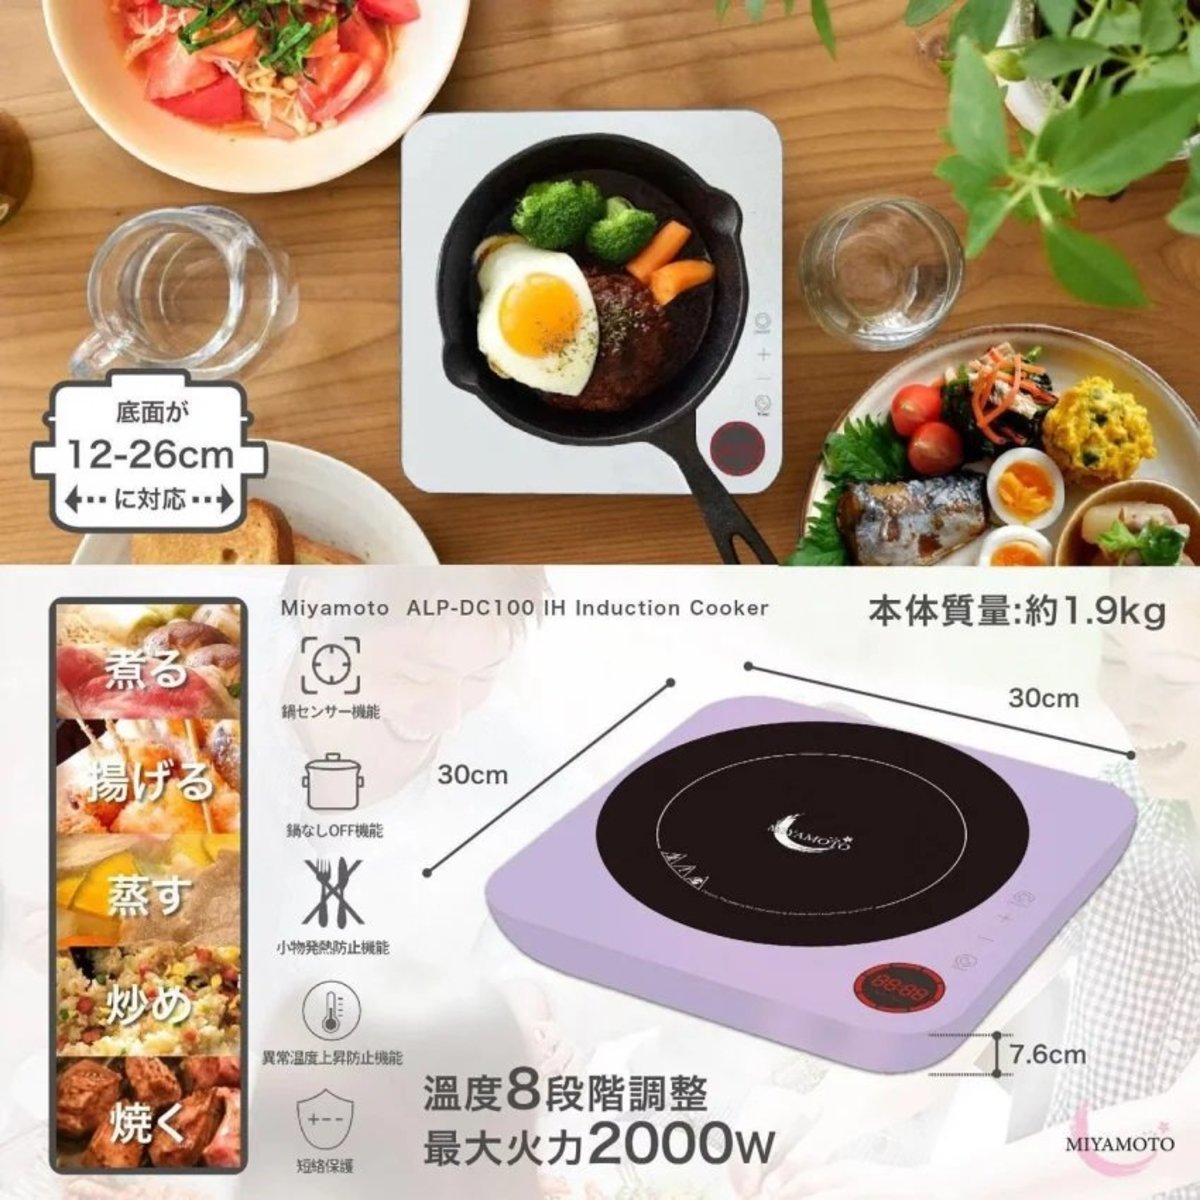 Miyamoto - Smart Induction Cooker - White [Licensed in Hong Kong]